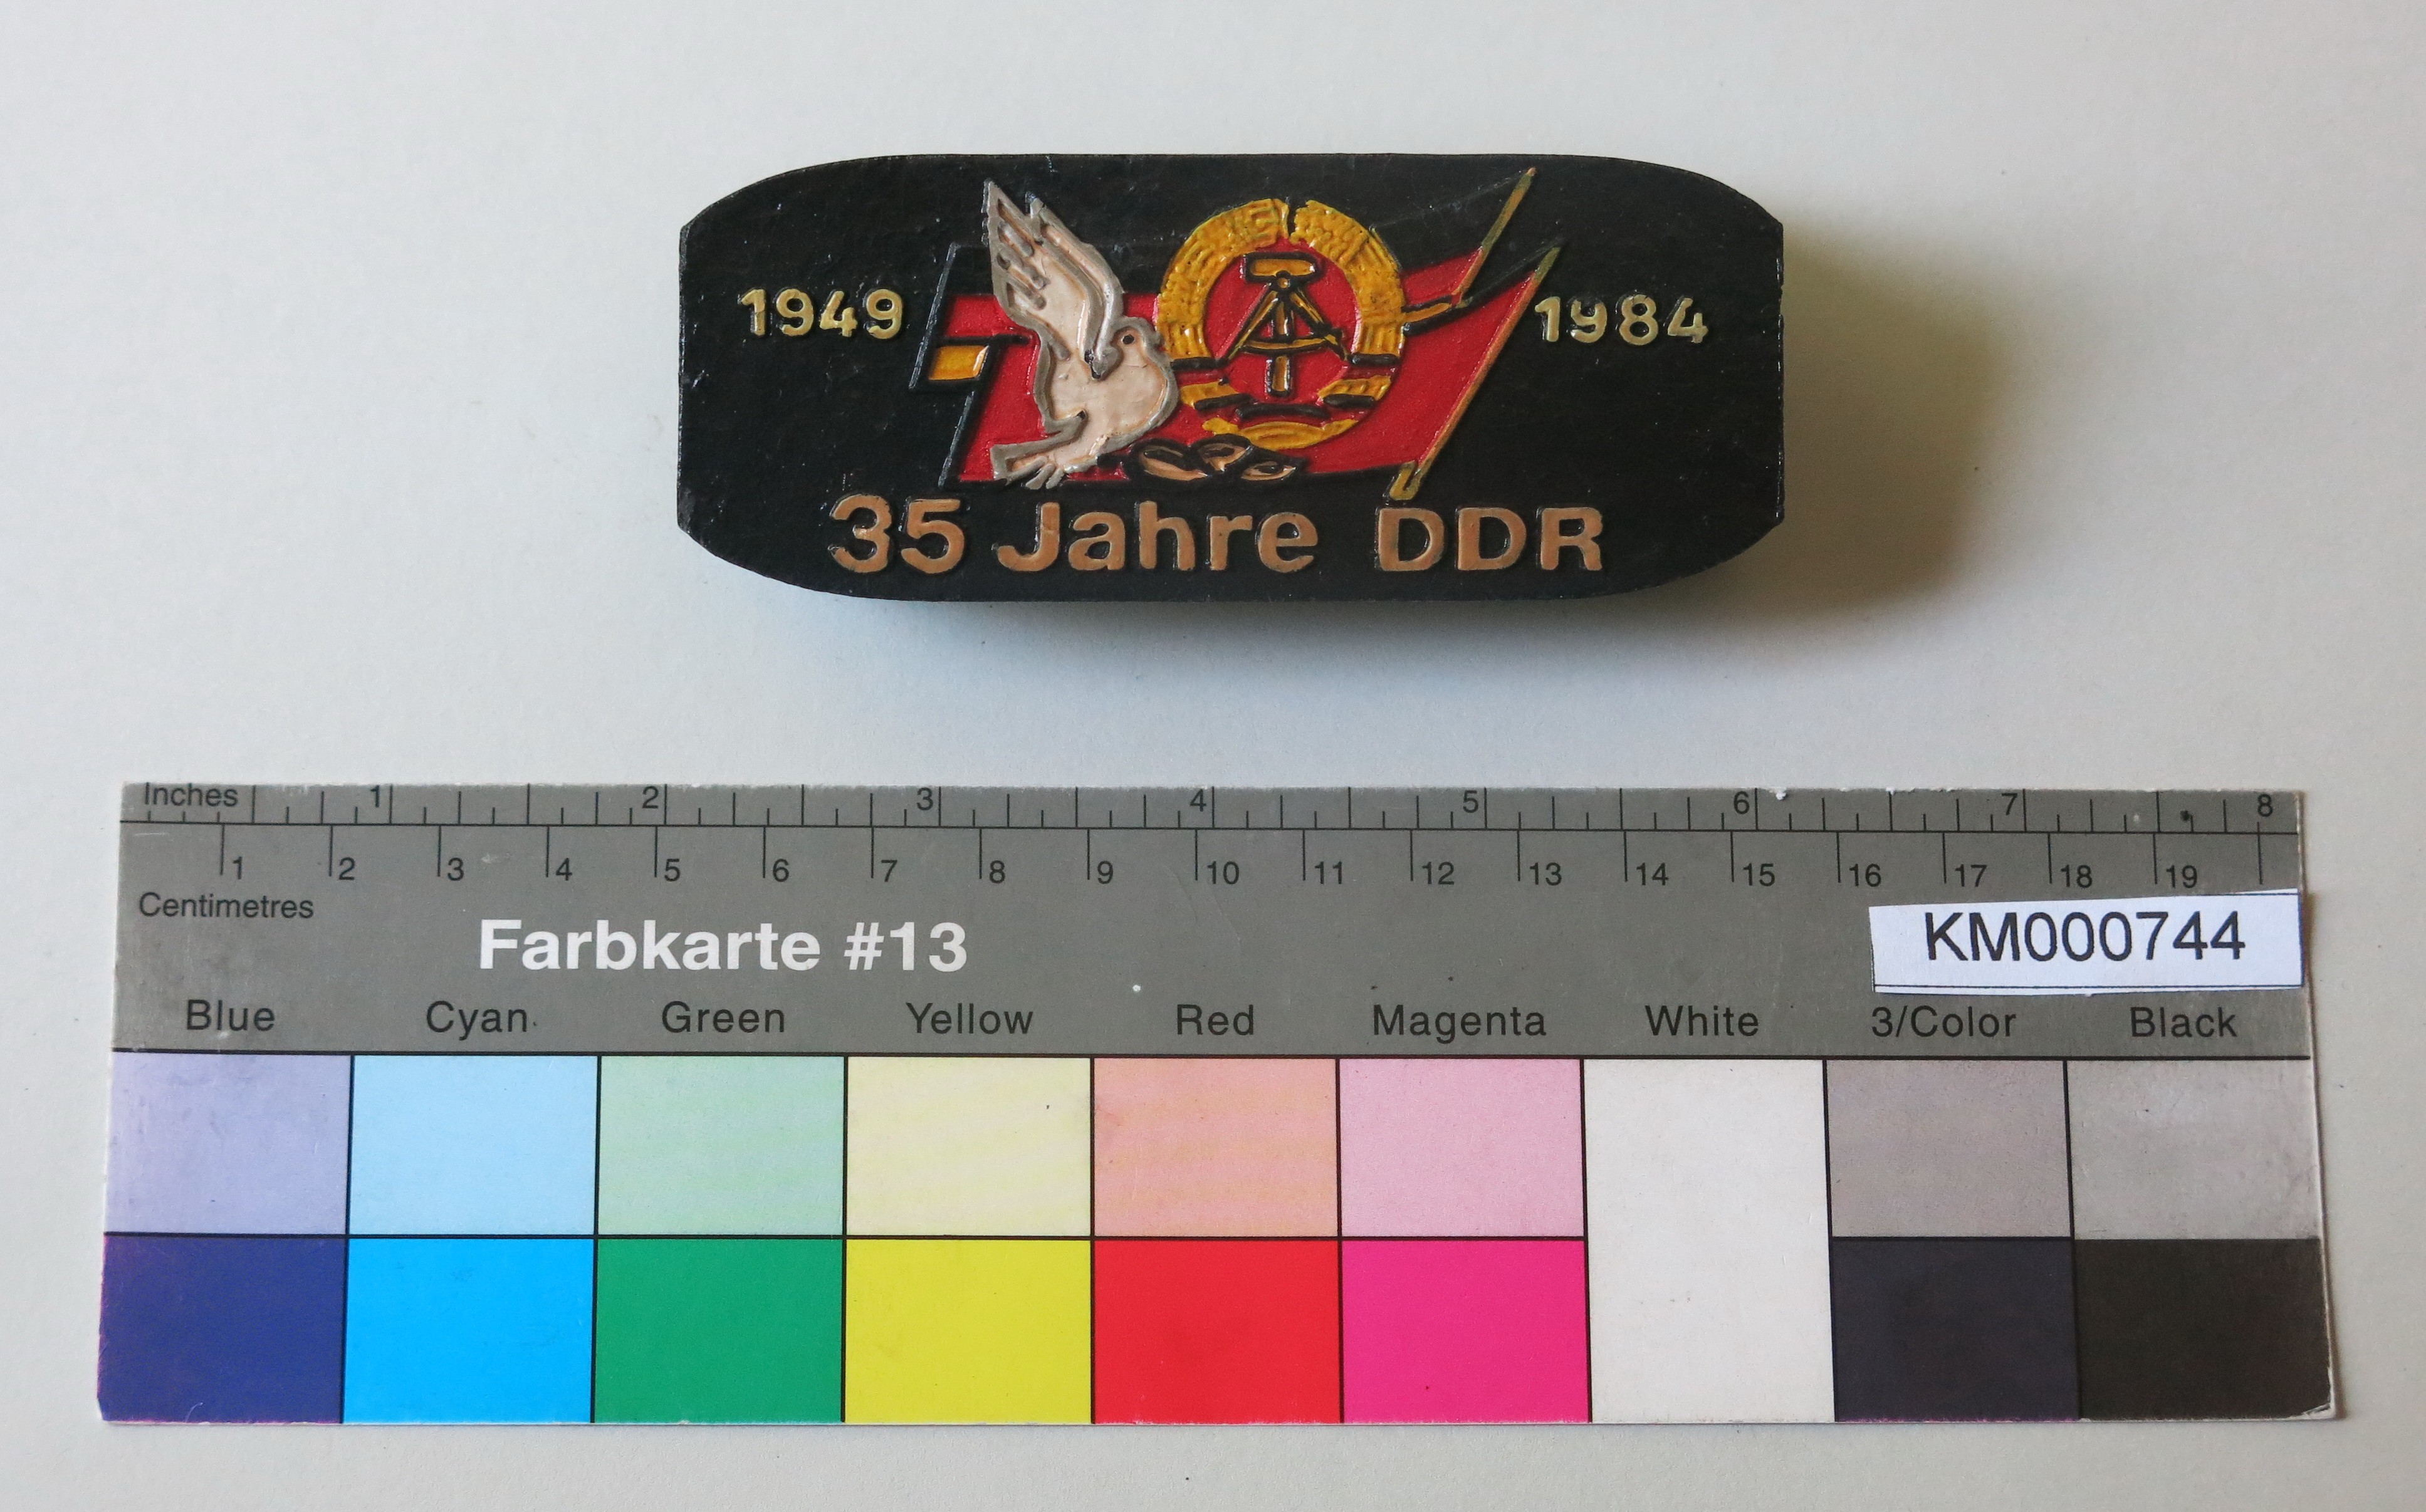 Zierbrikett " 1949 1984 25 Jahre DDR" (Energiefabrik Knappenrode CC BY-SA)